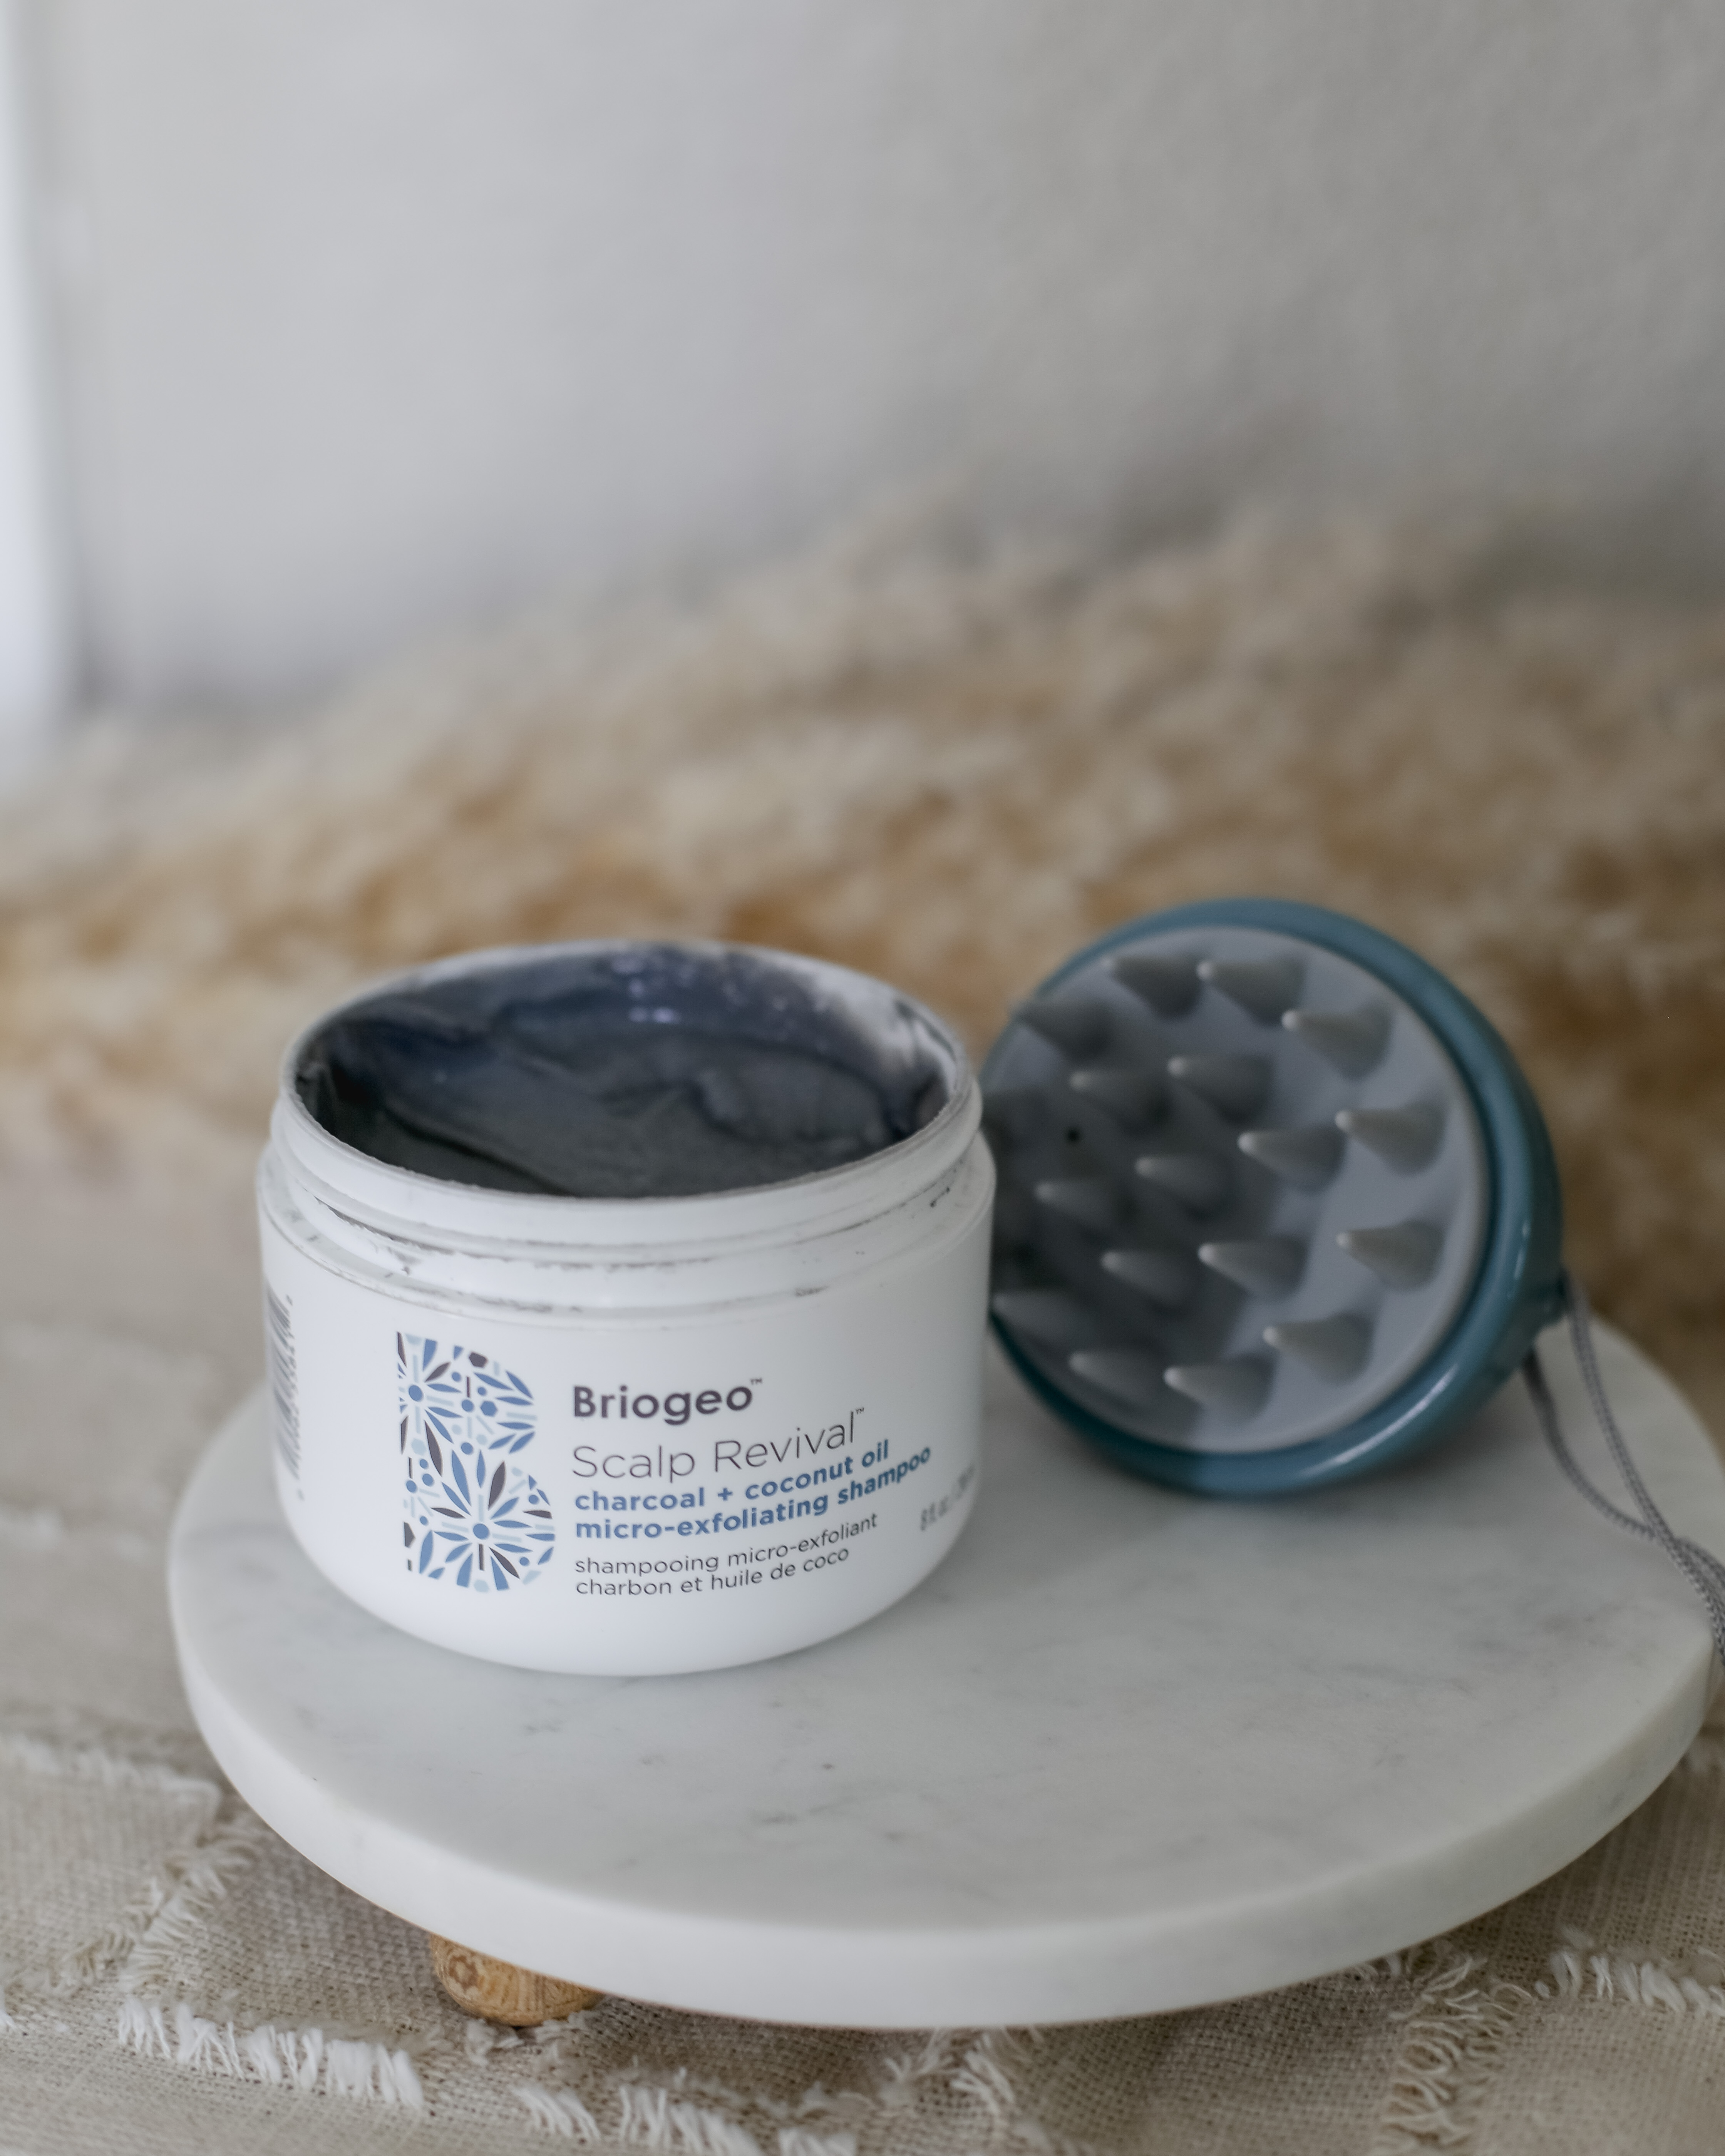 Briogeo Scalp Revival Review - Briogeo Scalp Revival Charcoal + Coconut Oil Micro-Exfoliating Shampoo Review 